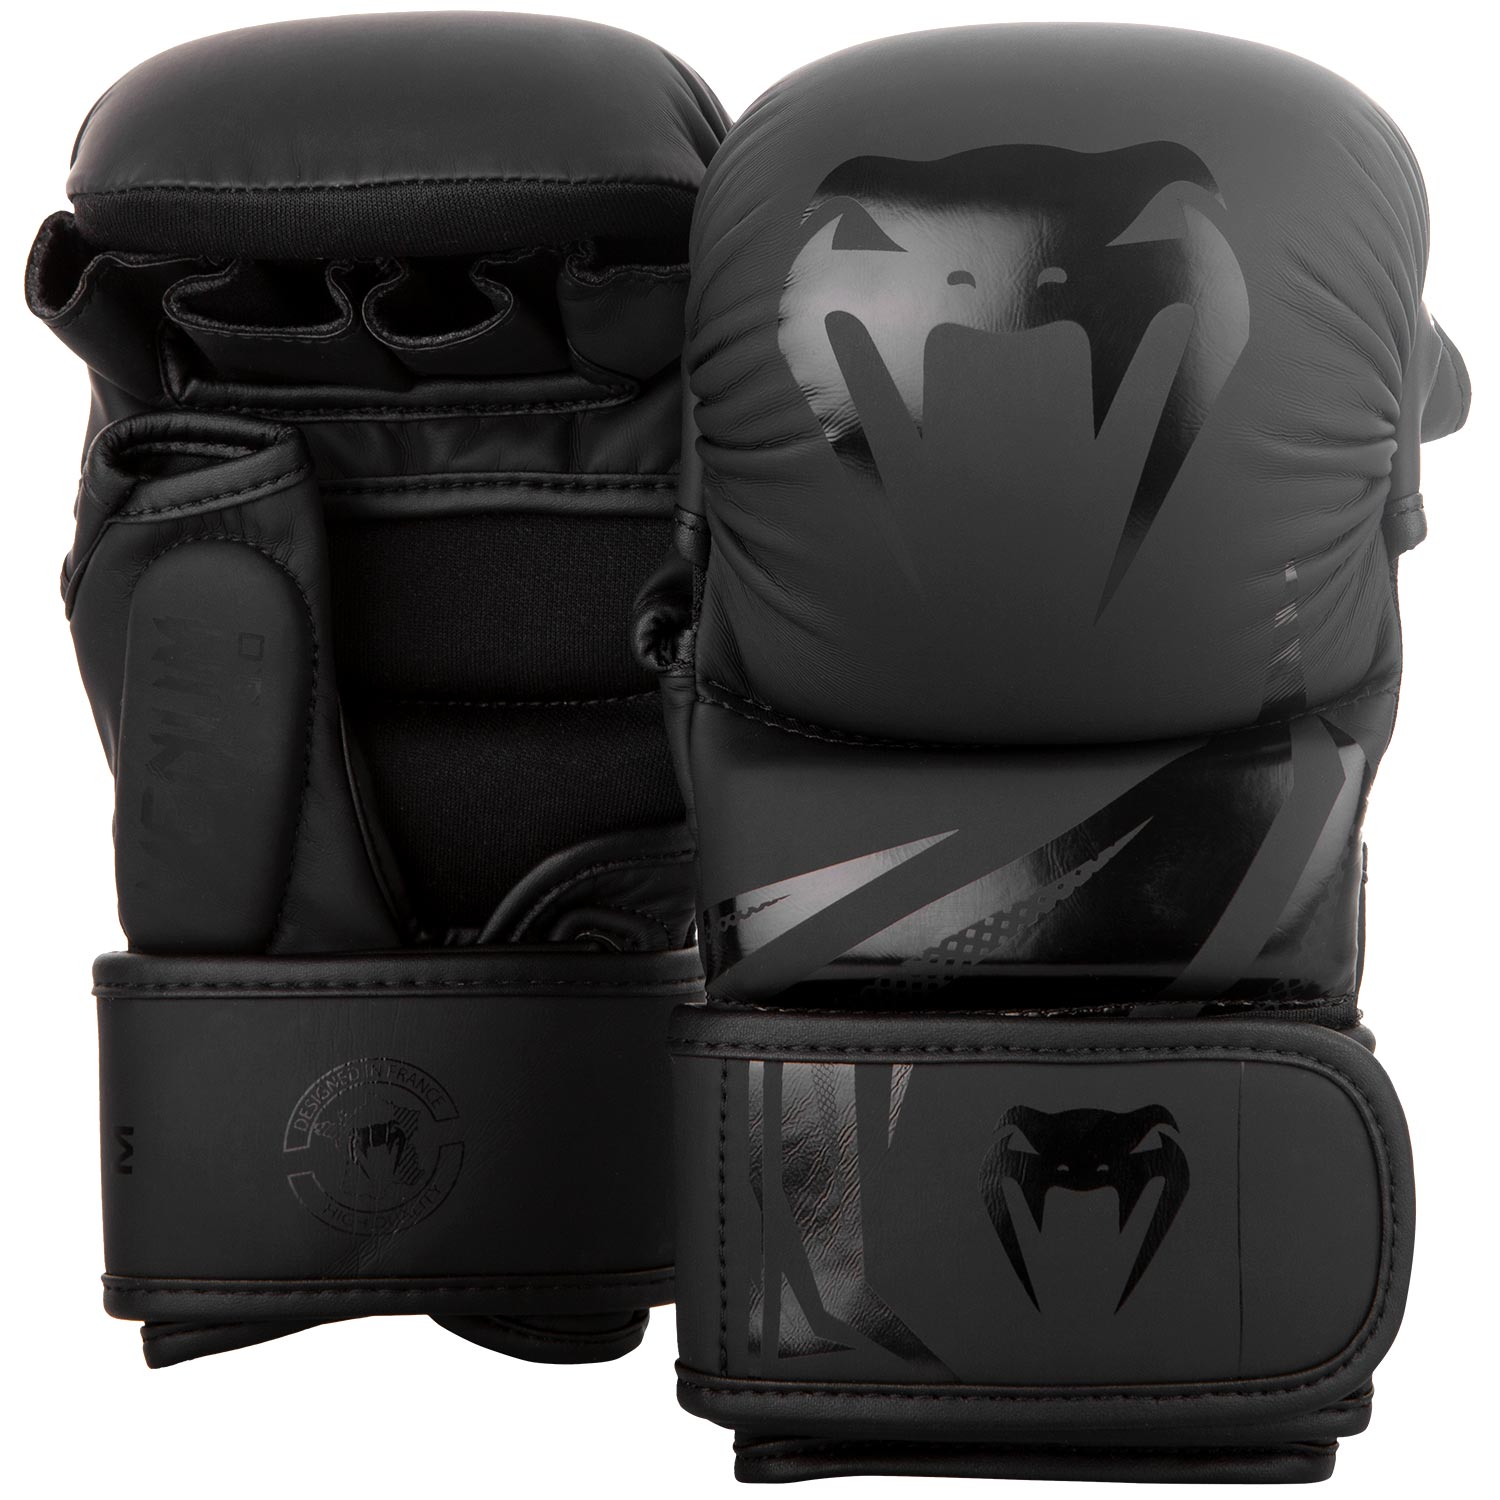 MMA sparring rukavice Challenger 3.0 černé VENUM vel. L/XL